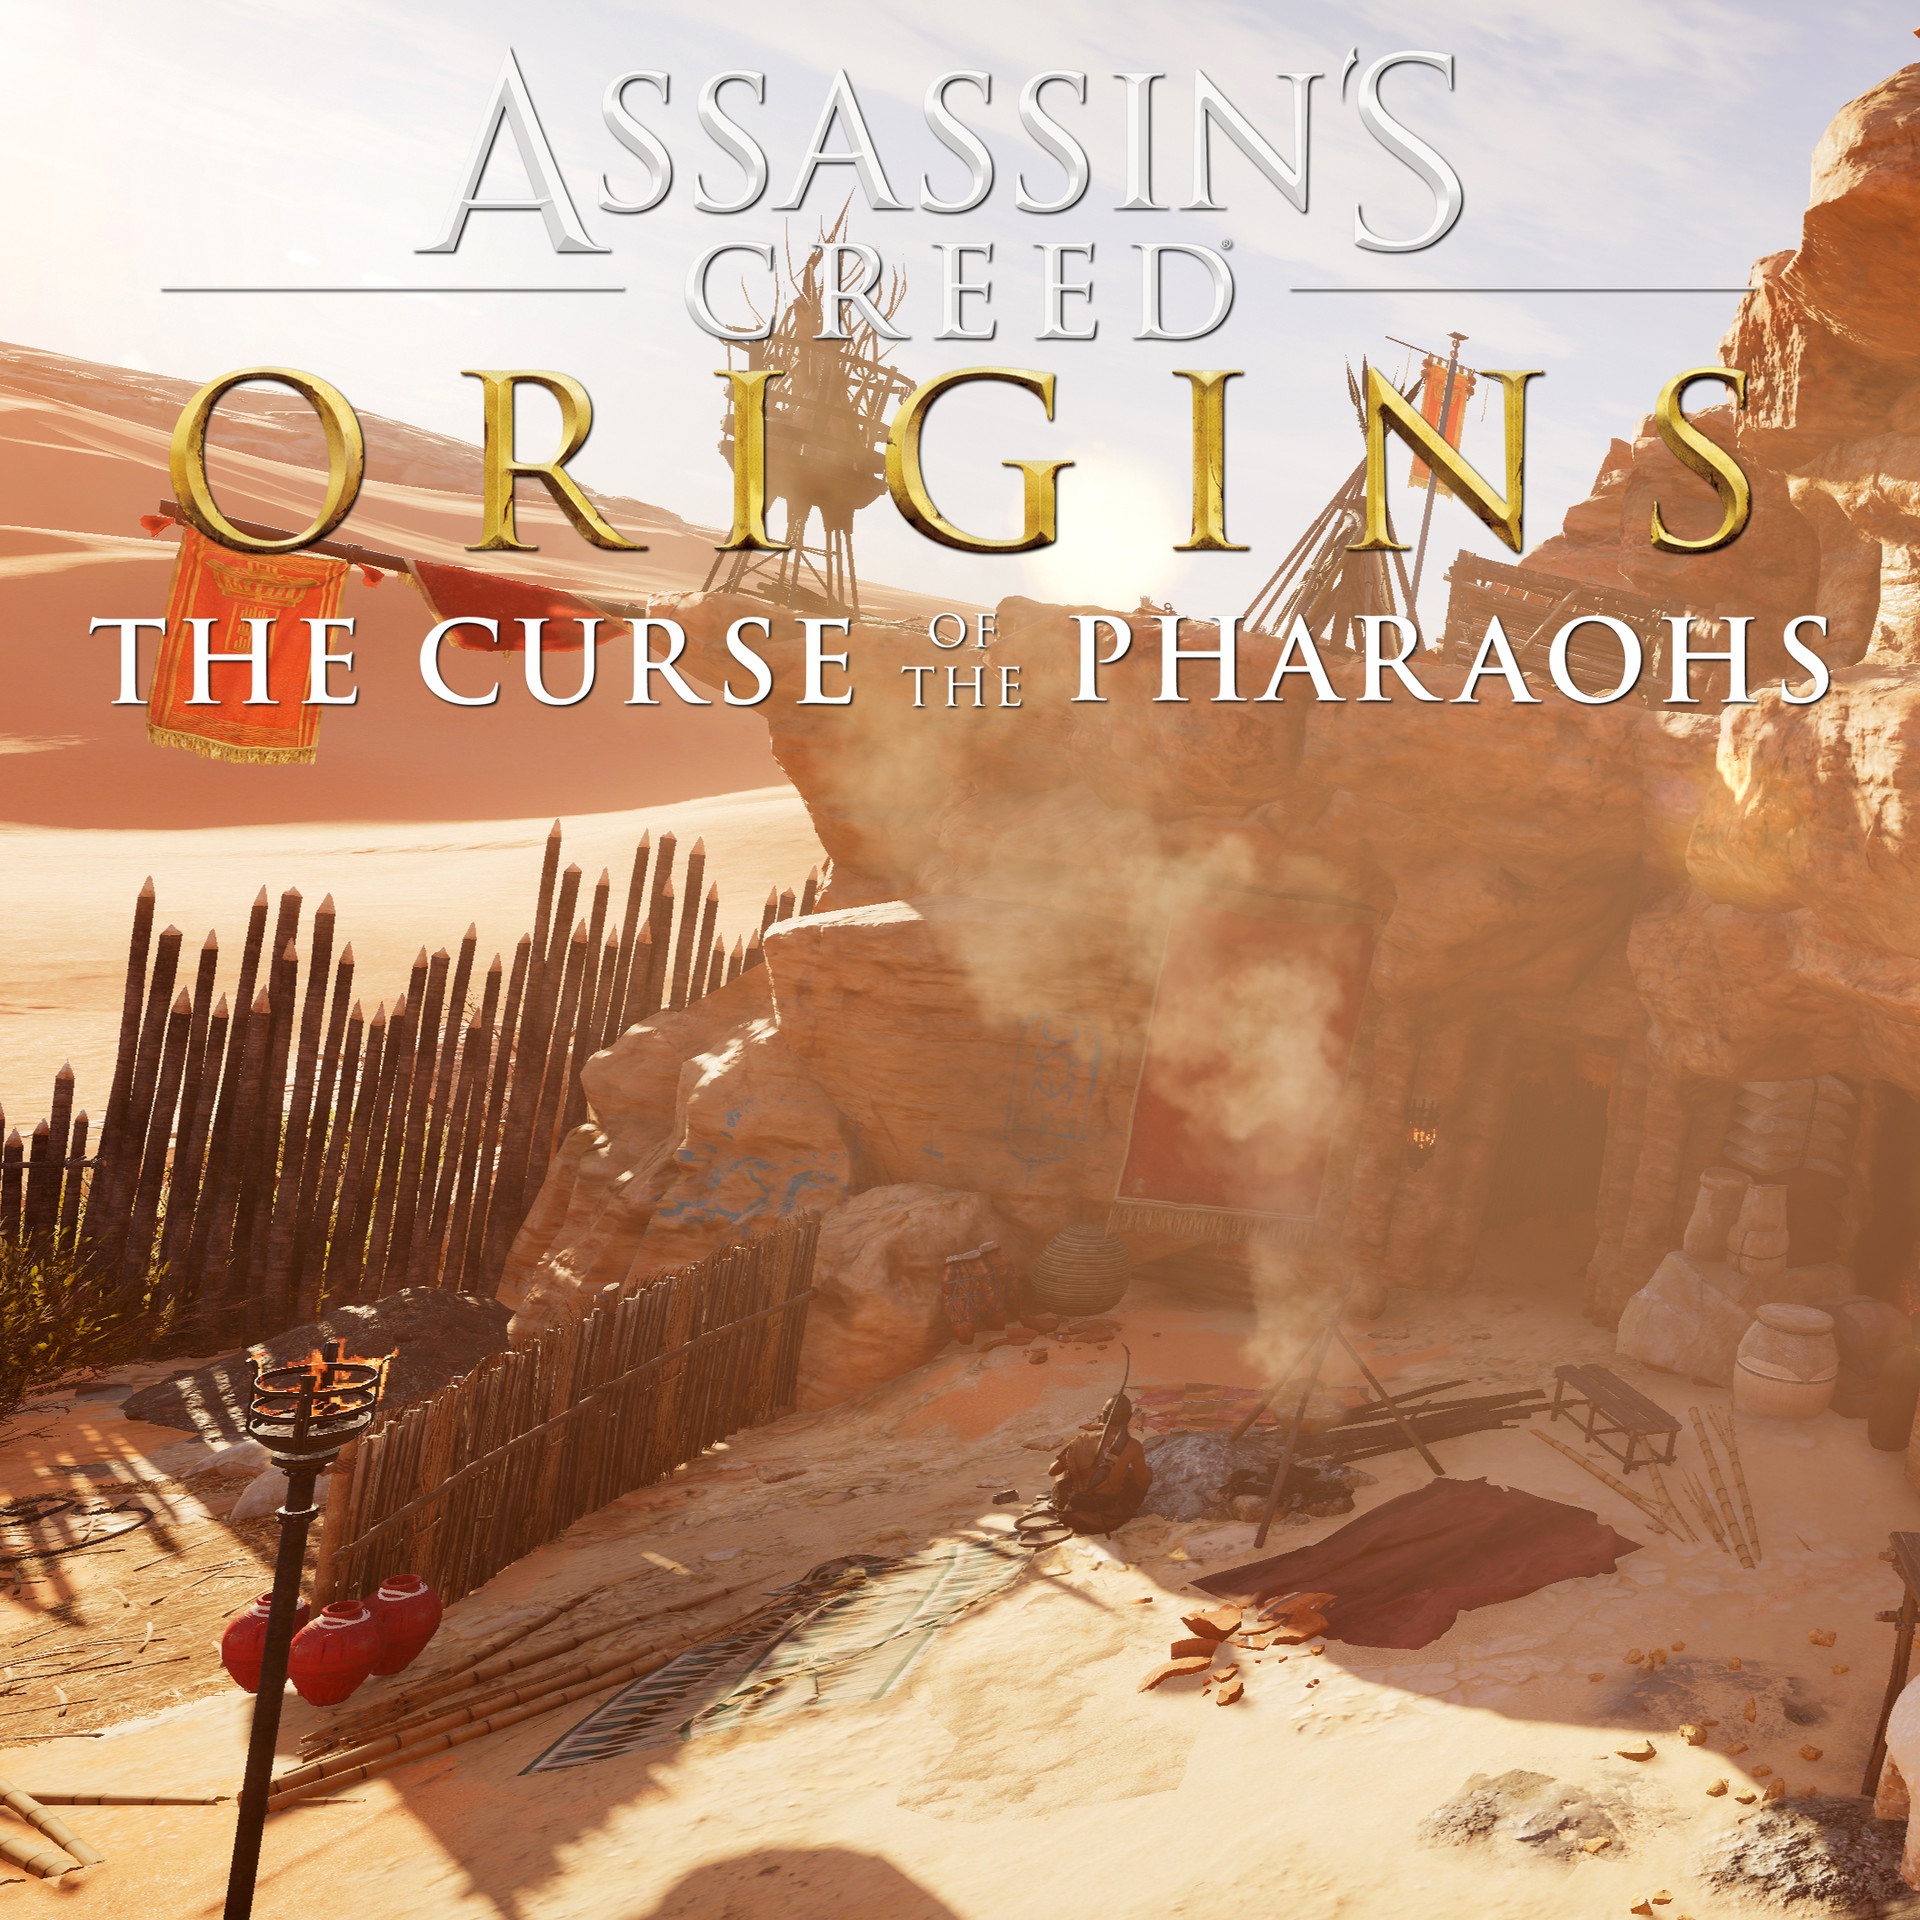 Assassin's Creed Origins - Wikipedia